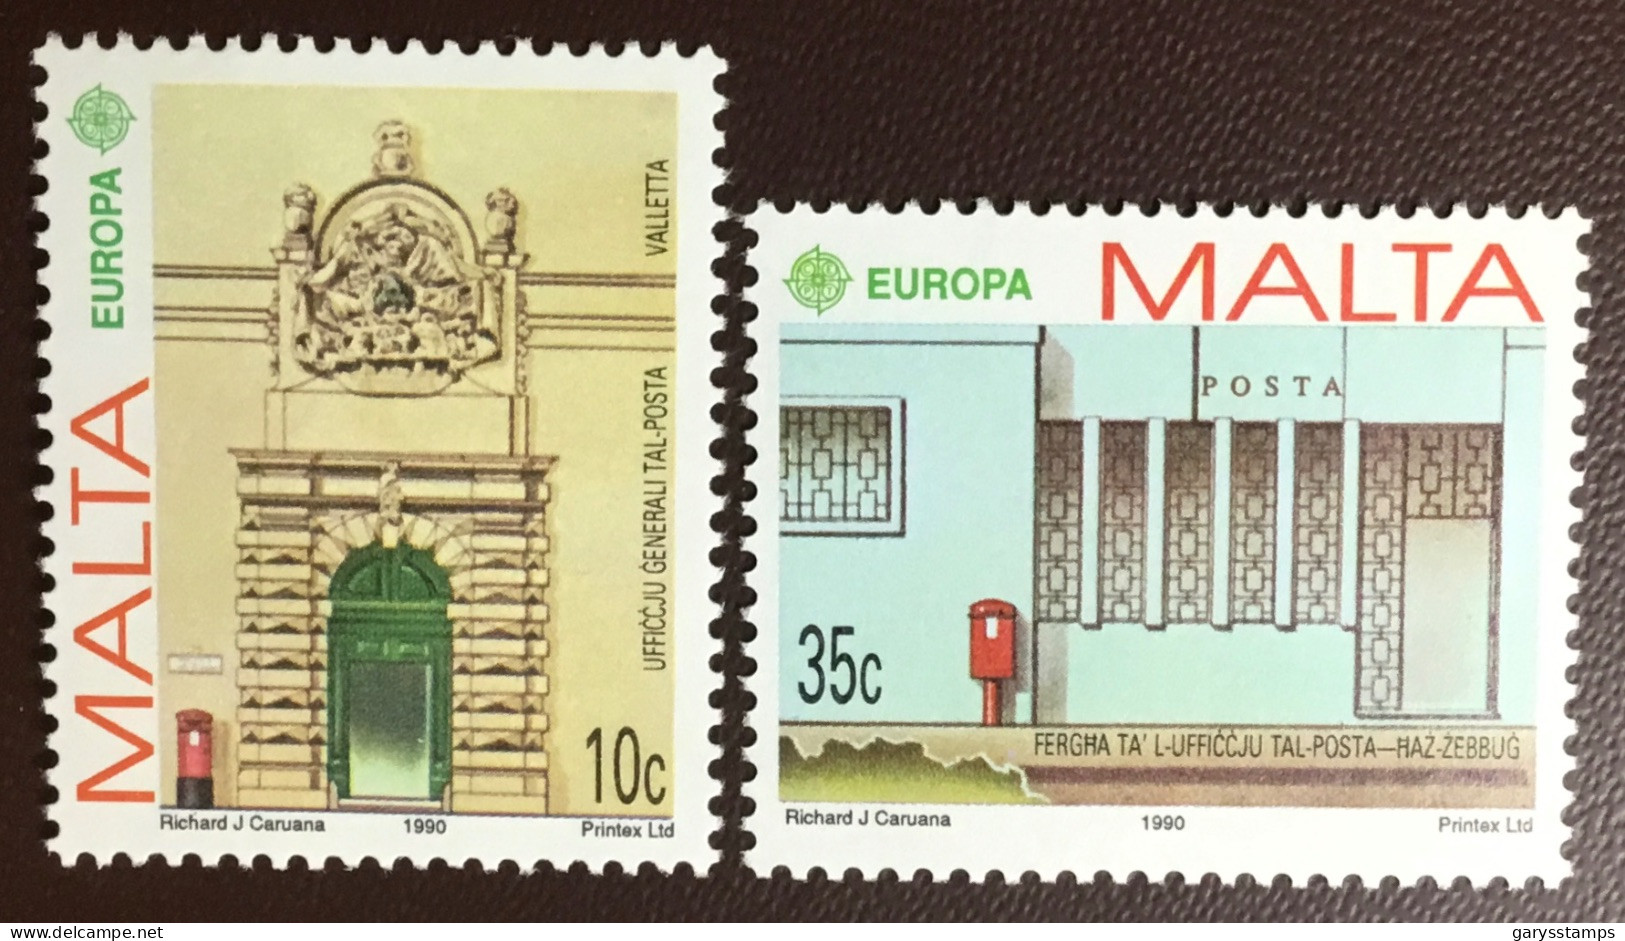 Malta 1990 Europa MNH - Malte